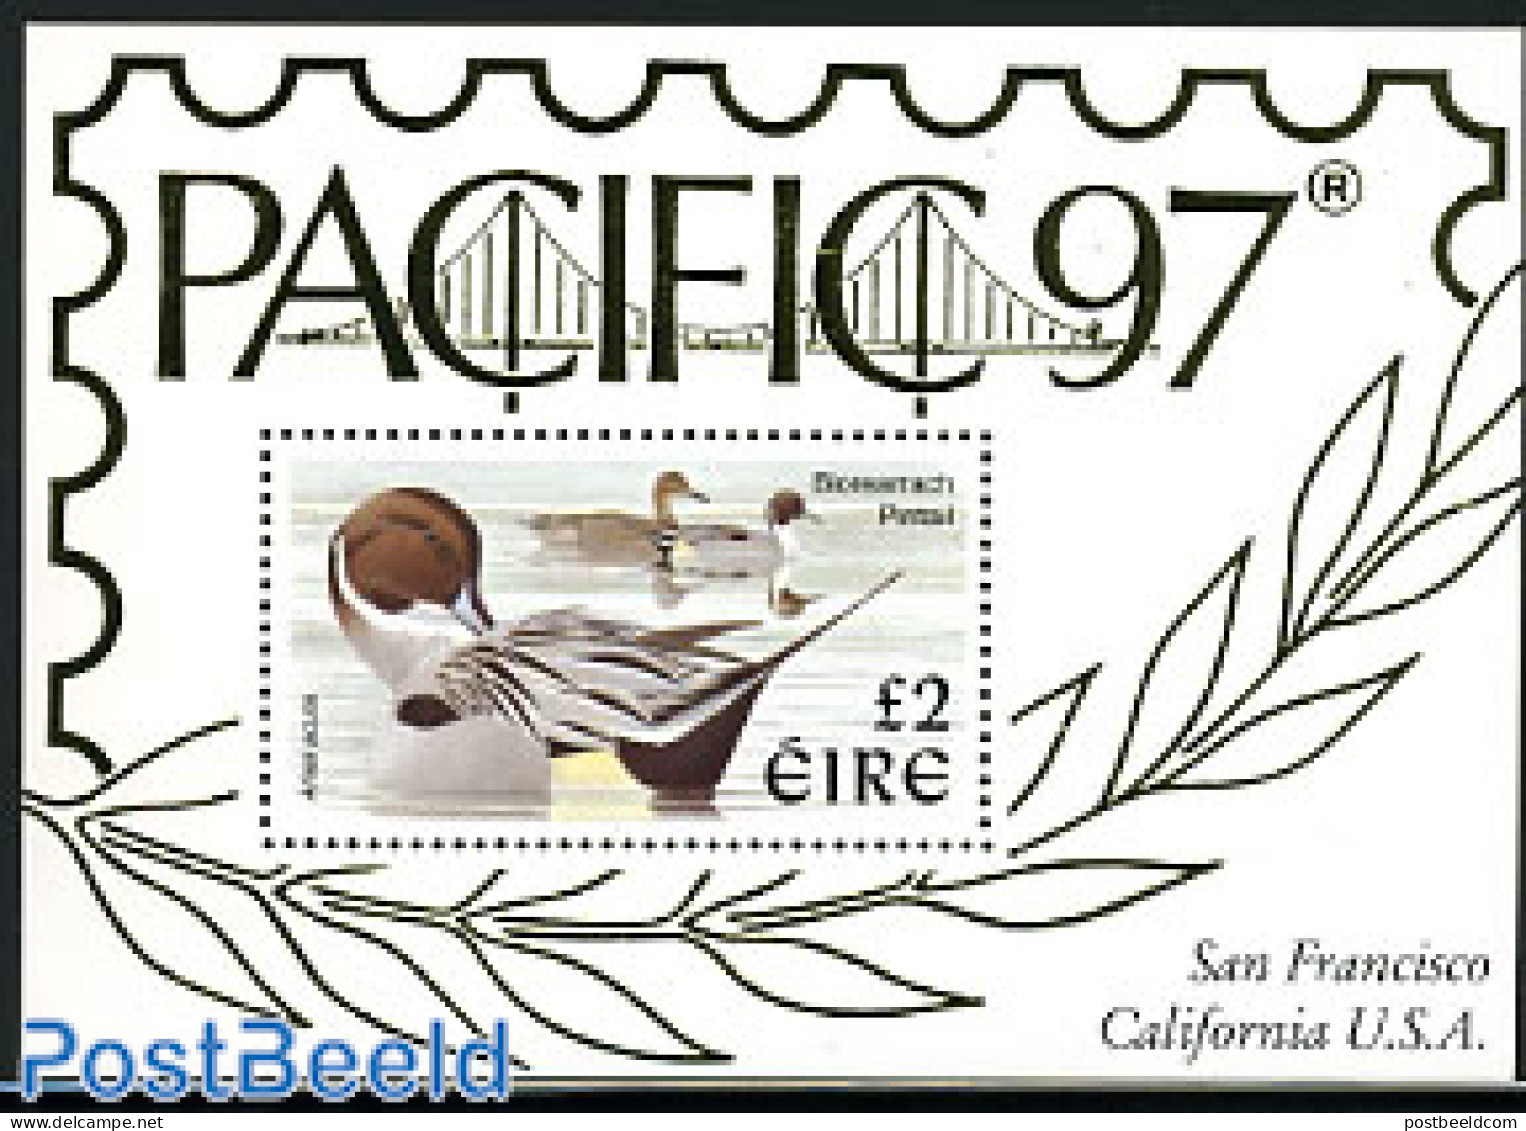 Ireland 1997 Pacific 97 S/s, Mint NH, Nature - Birds - Ducks - Unused Stamps